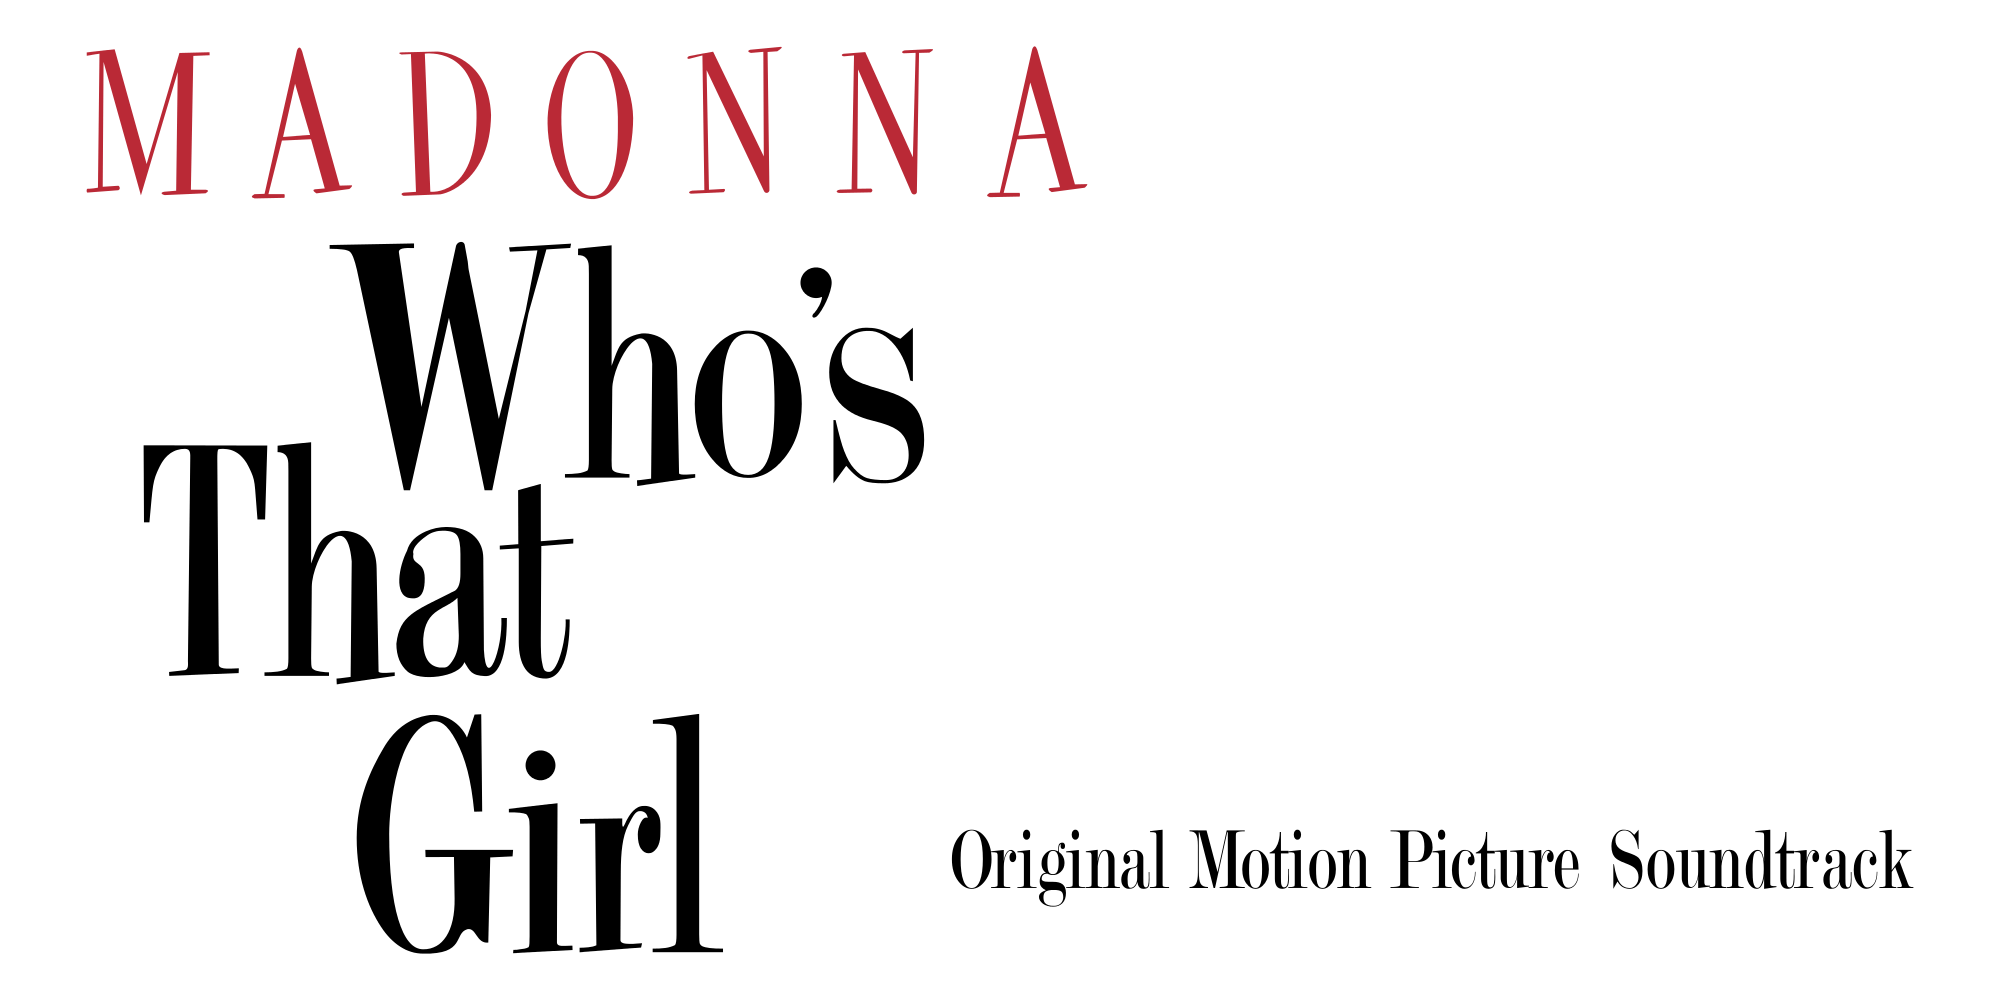 That Girl Logo - File:Maddona's Who's That Girl (soundtrack) logo.svg - Wikimedia Commons